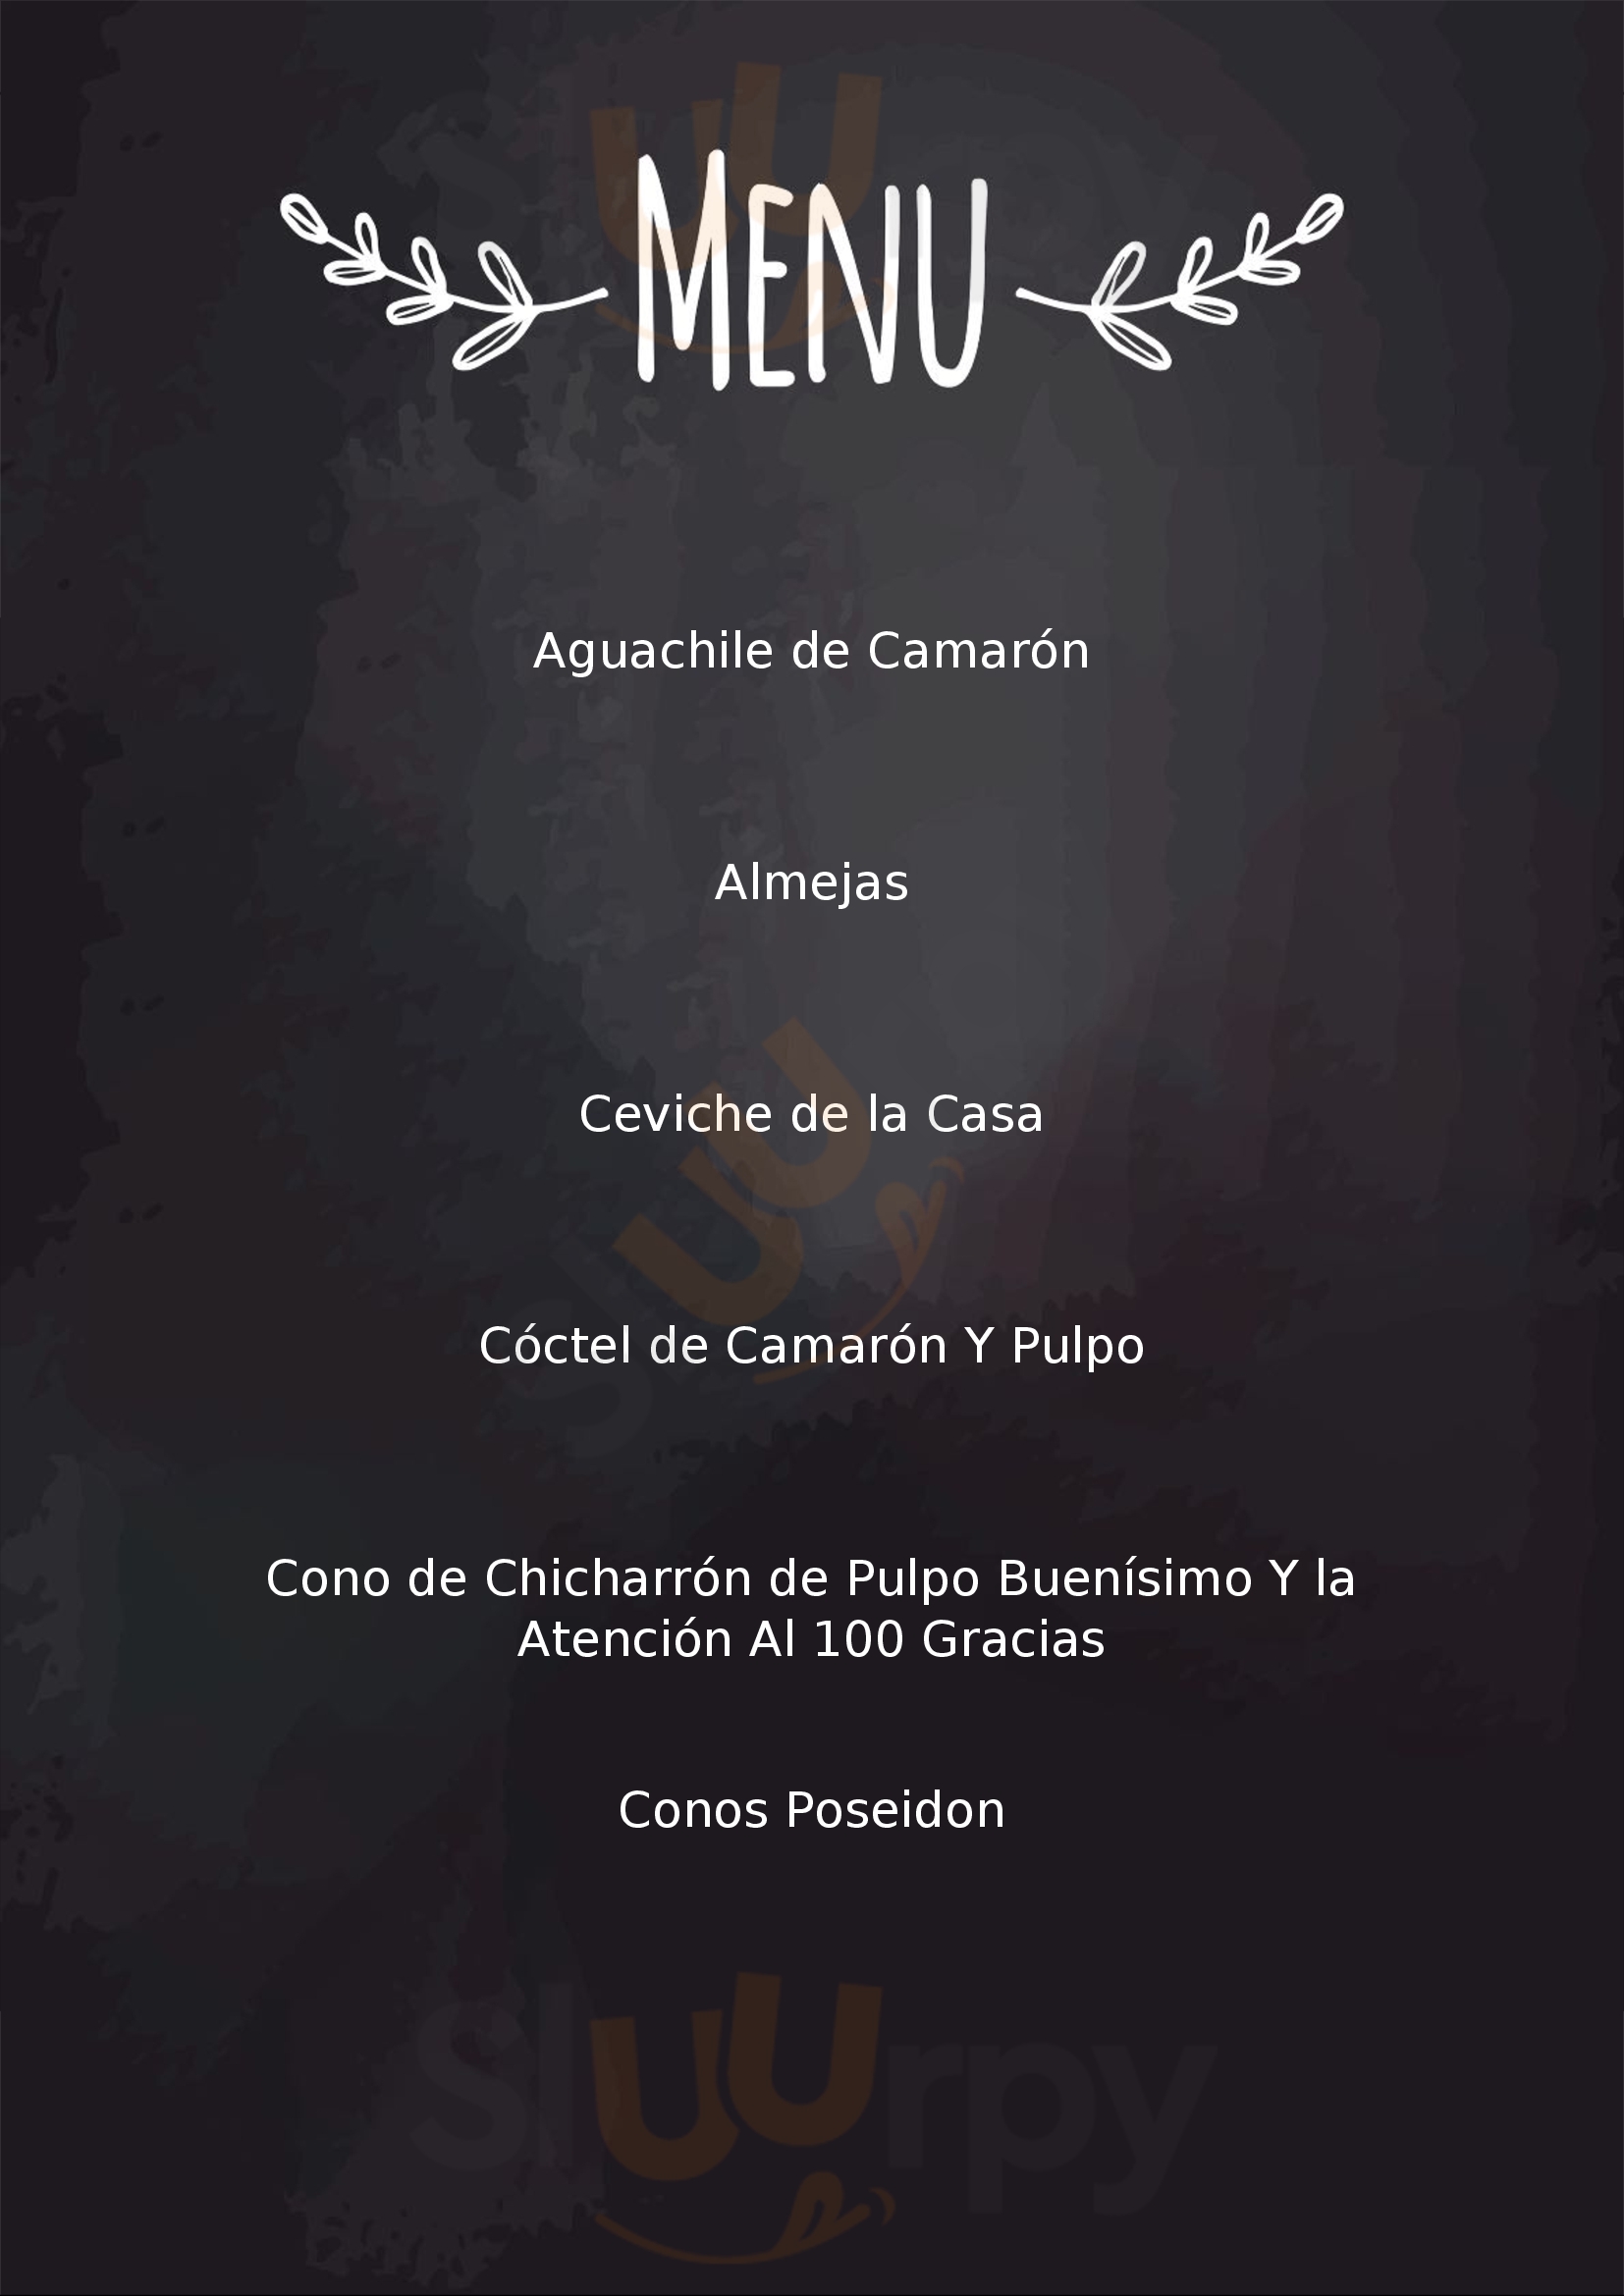 La Cevicheria Oyster Bar Ensenada Menu - 1